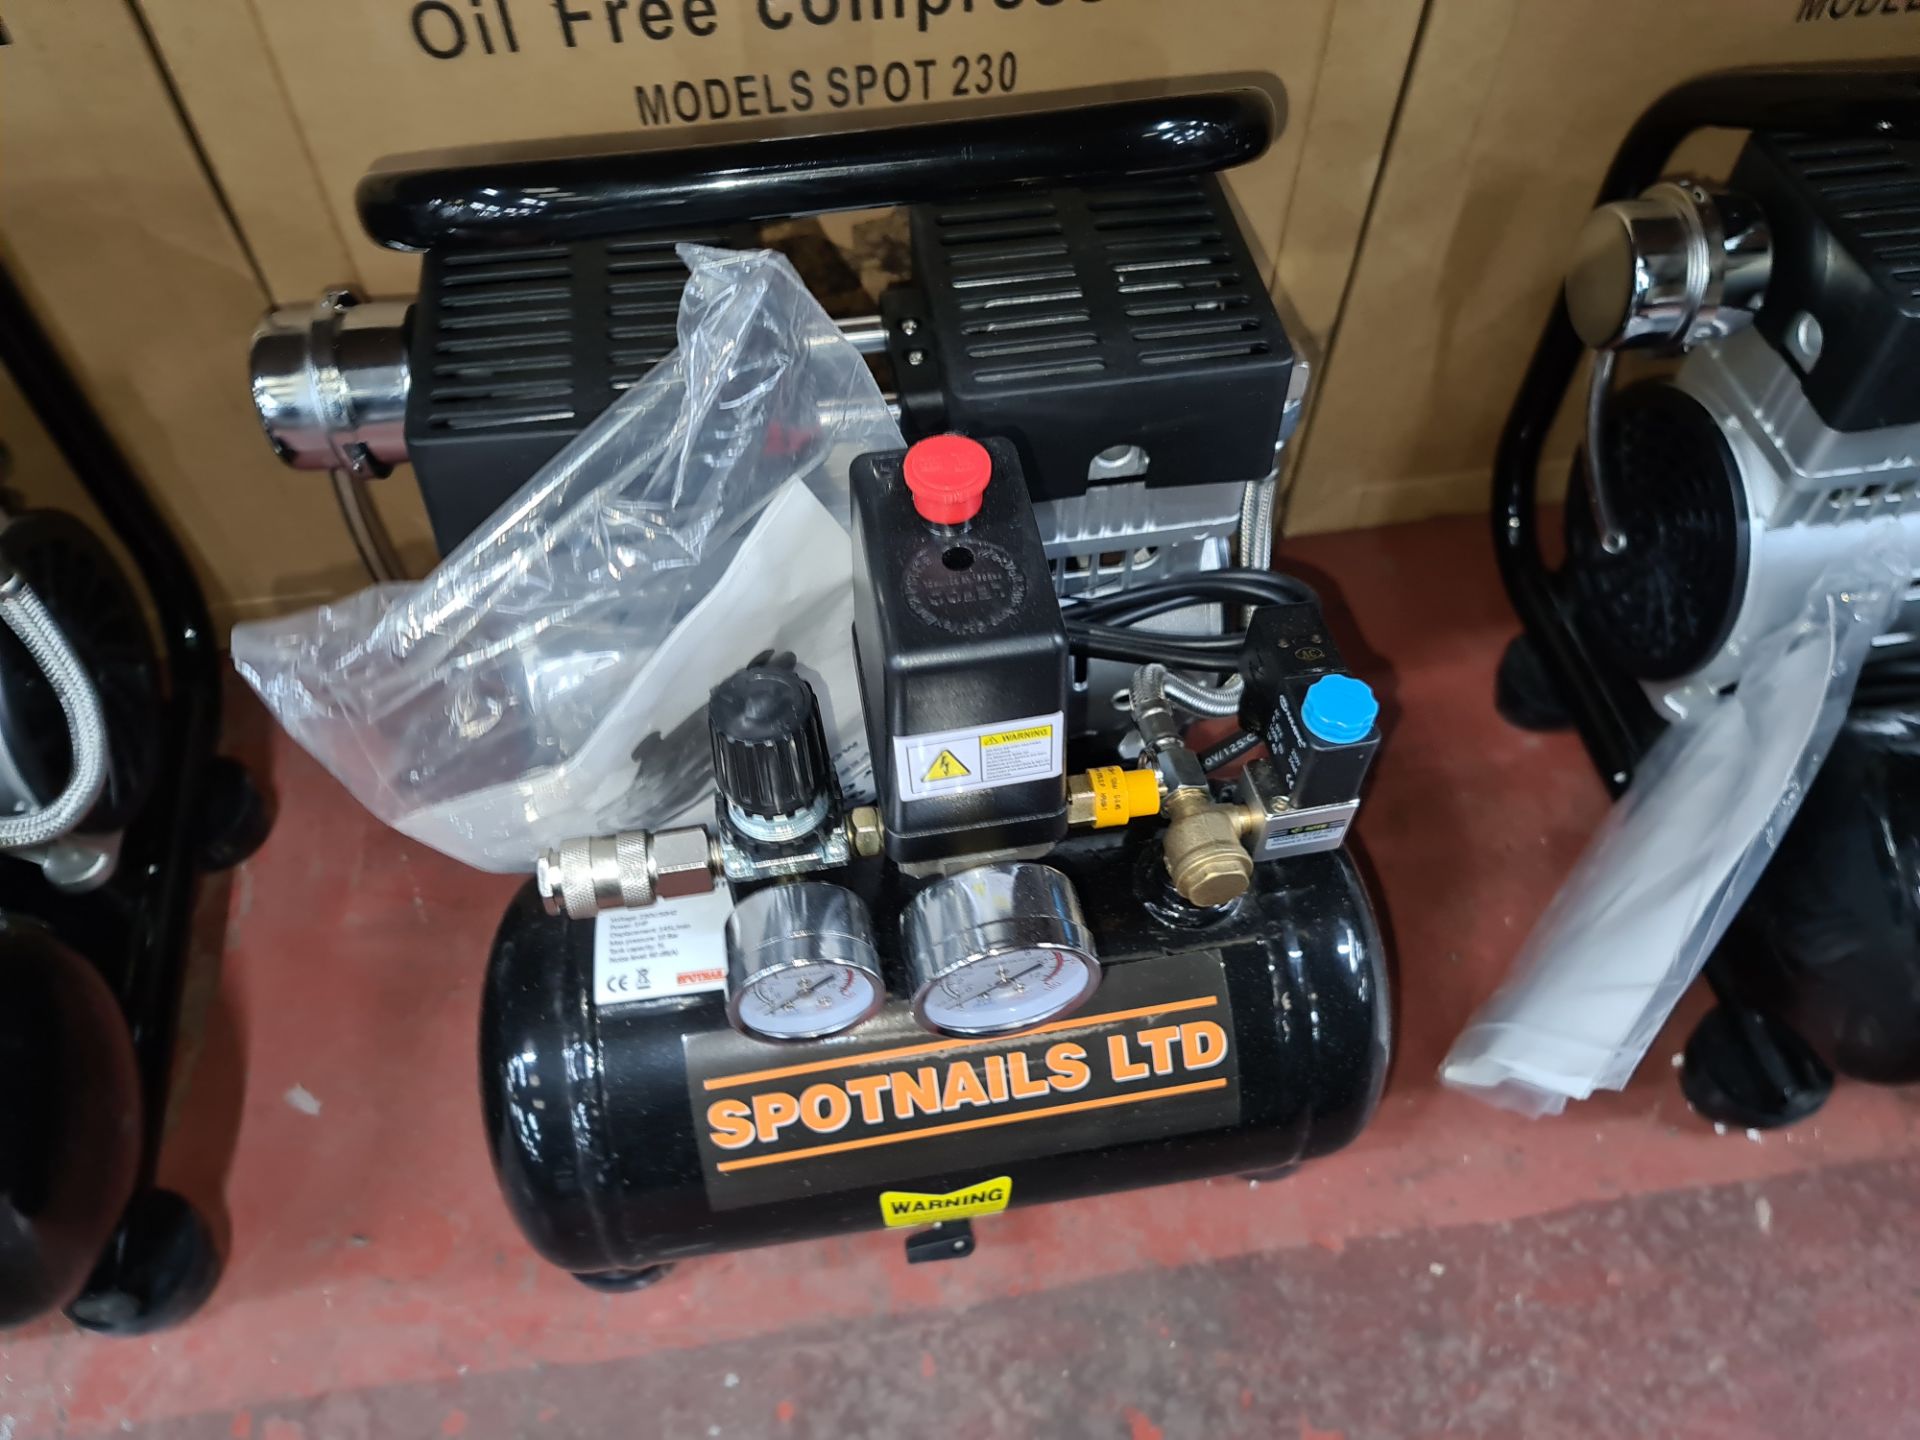 Spotnails Ltd oil-free air compressor model Spot230Lots 31 - 328 comprise the total assets of a - Image 2 of 5